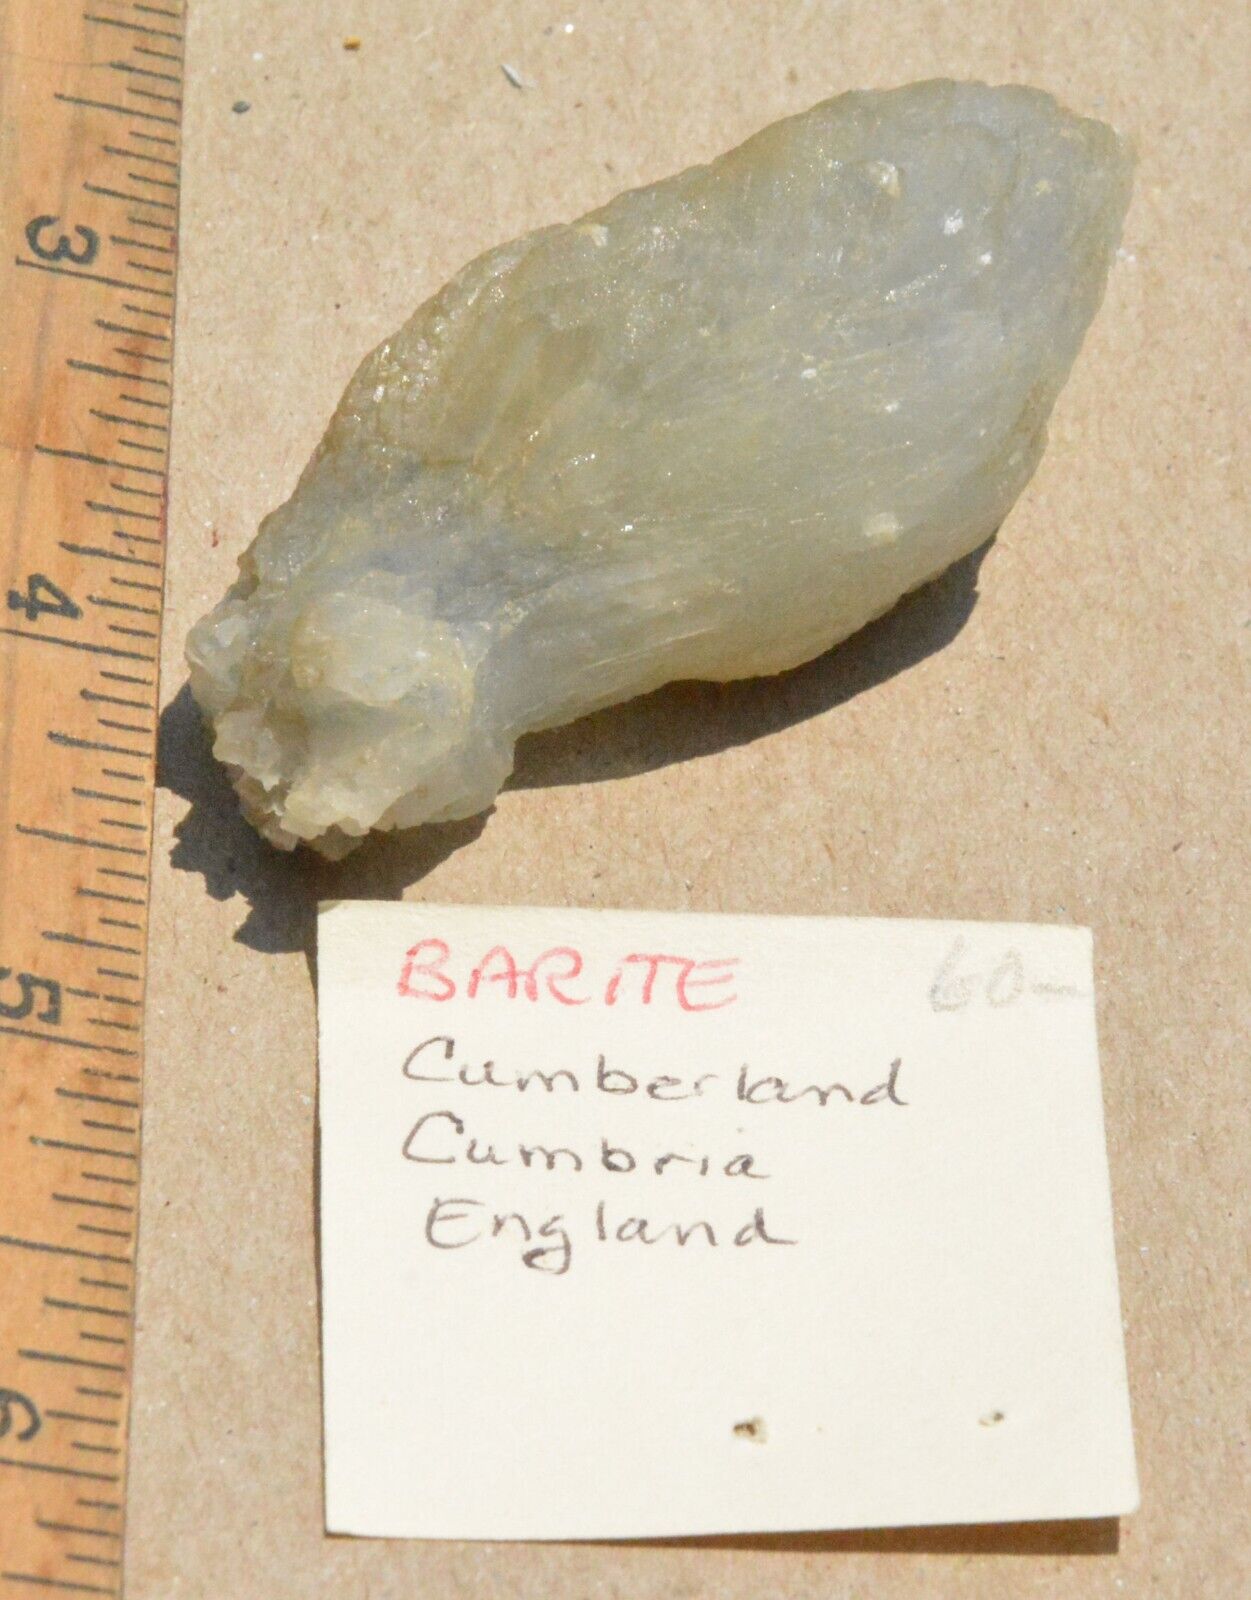 Barite Crystal Cluster, Cumberland, Cumcria England, (Steve Garza)....